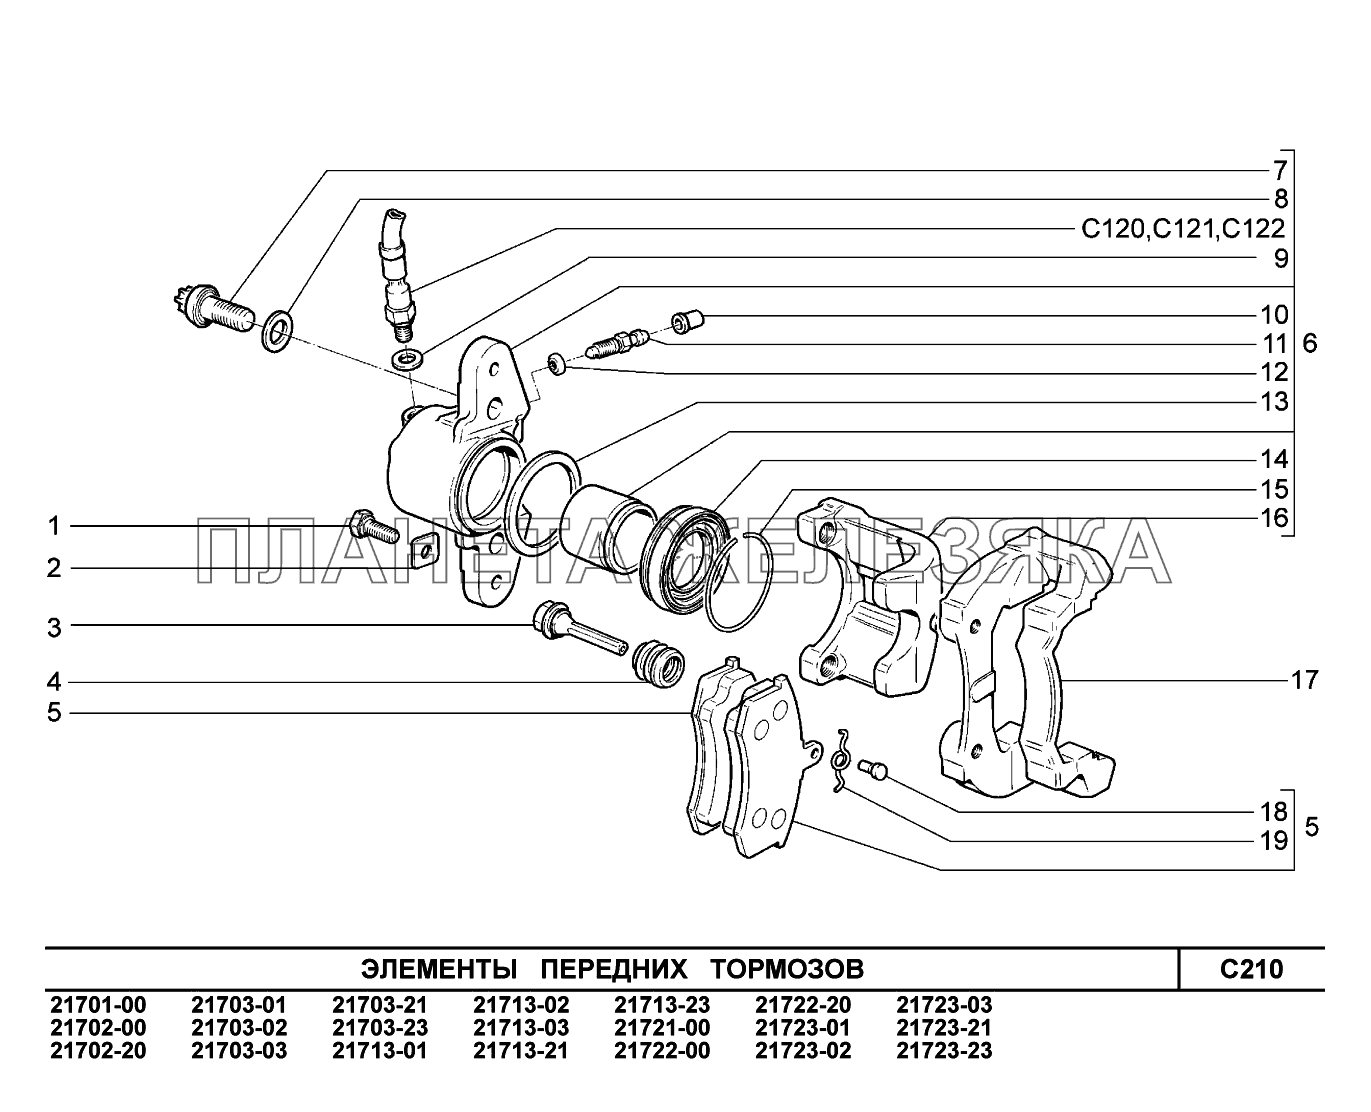 C210. Элементы передних тормозов ВАЗ-2170 